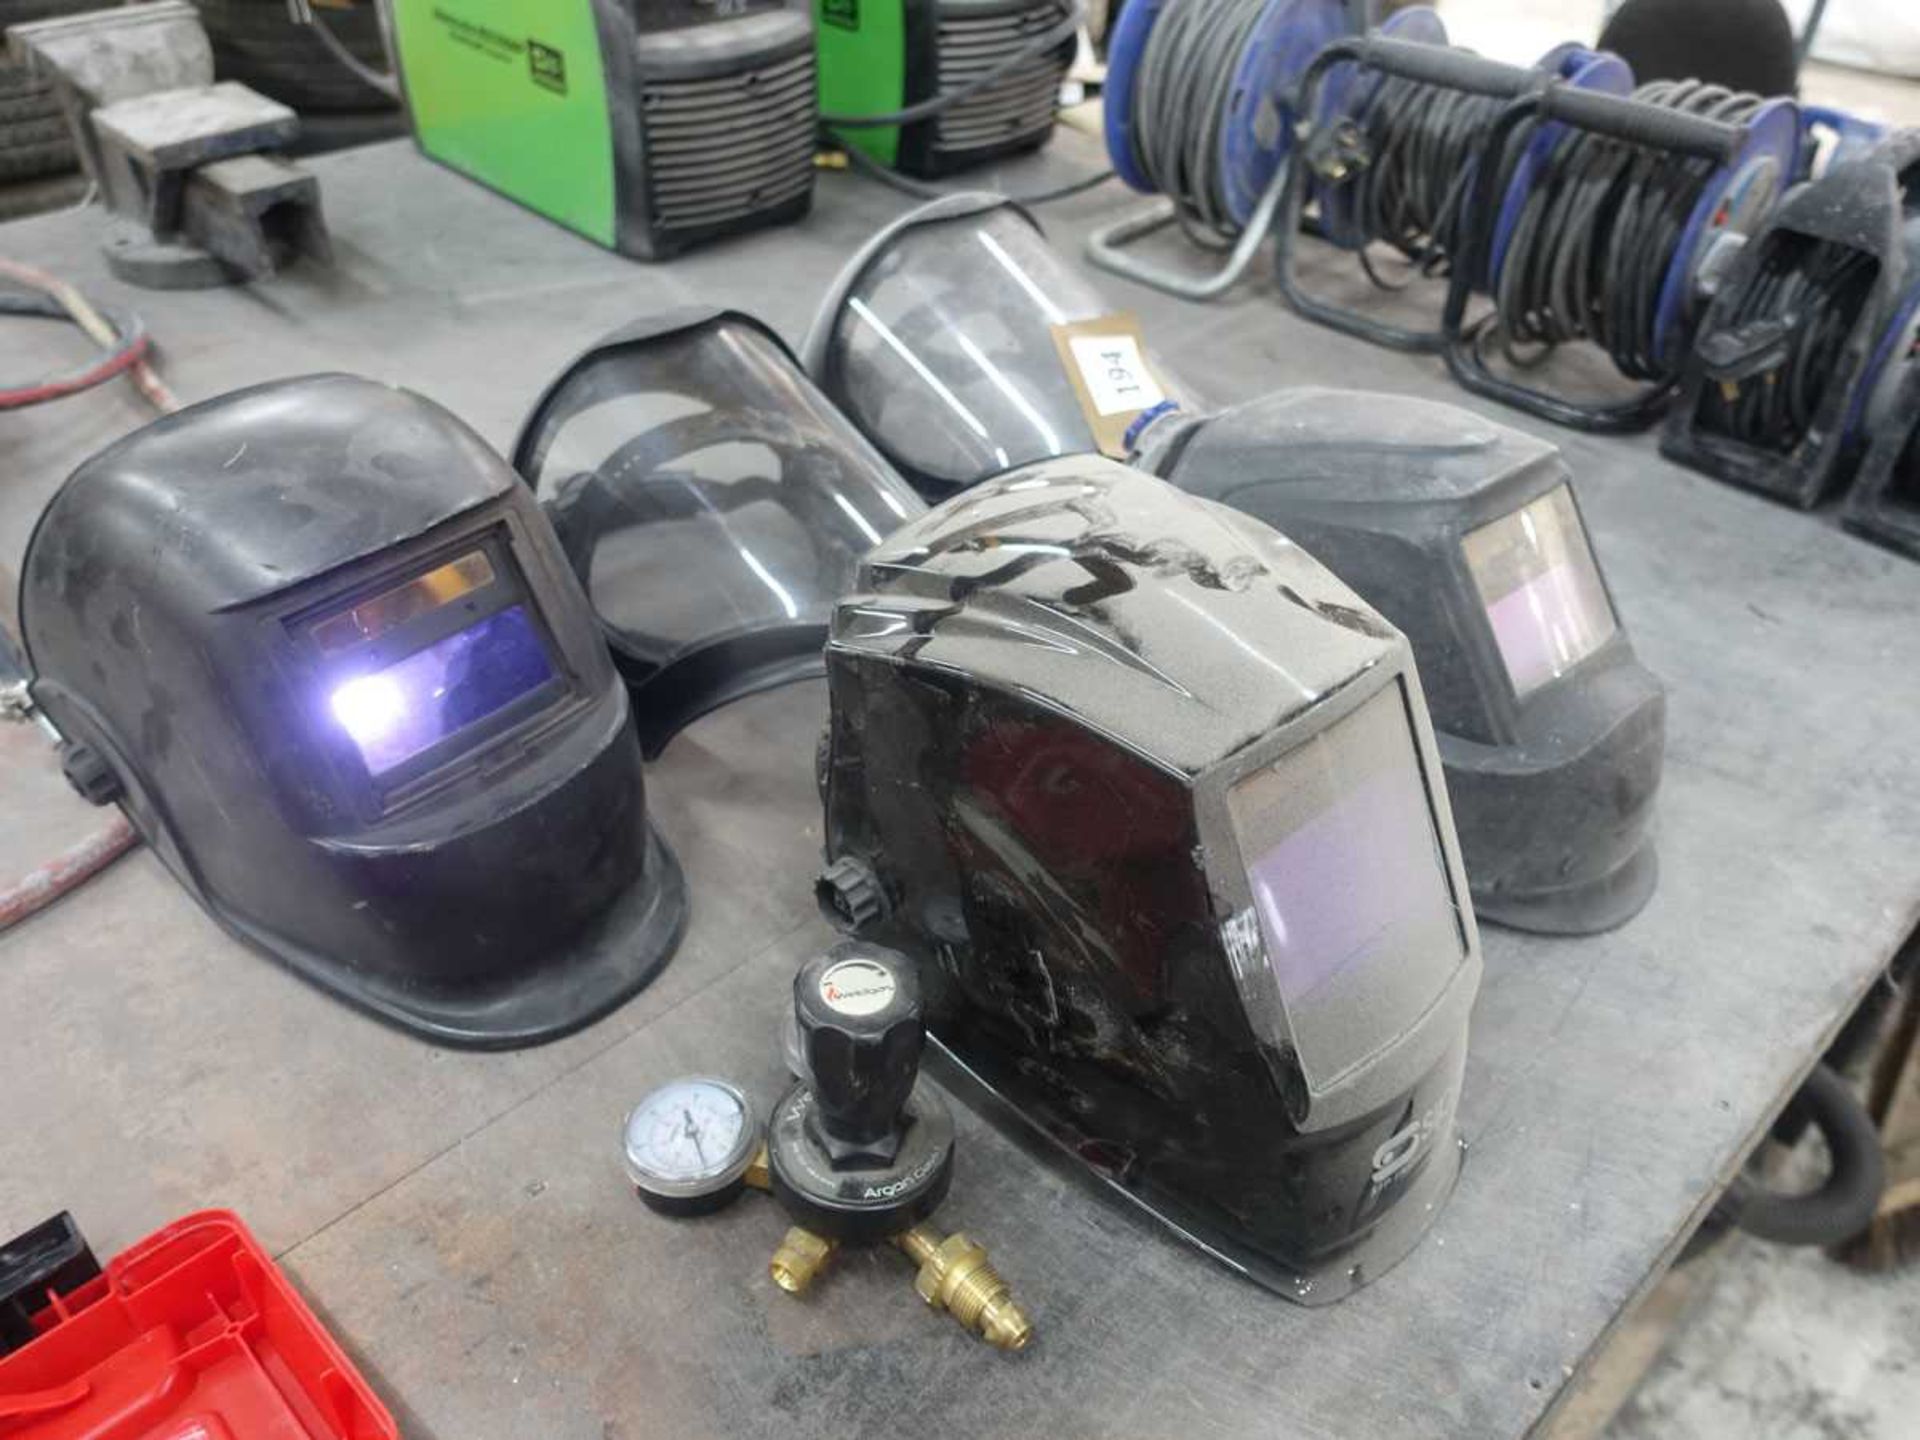 +VAT Three welding helmets, set of welding gauges and two safety masks